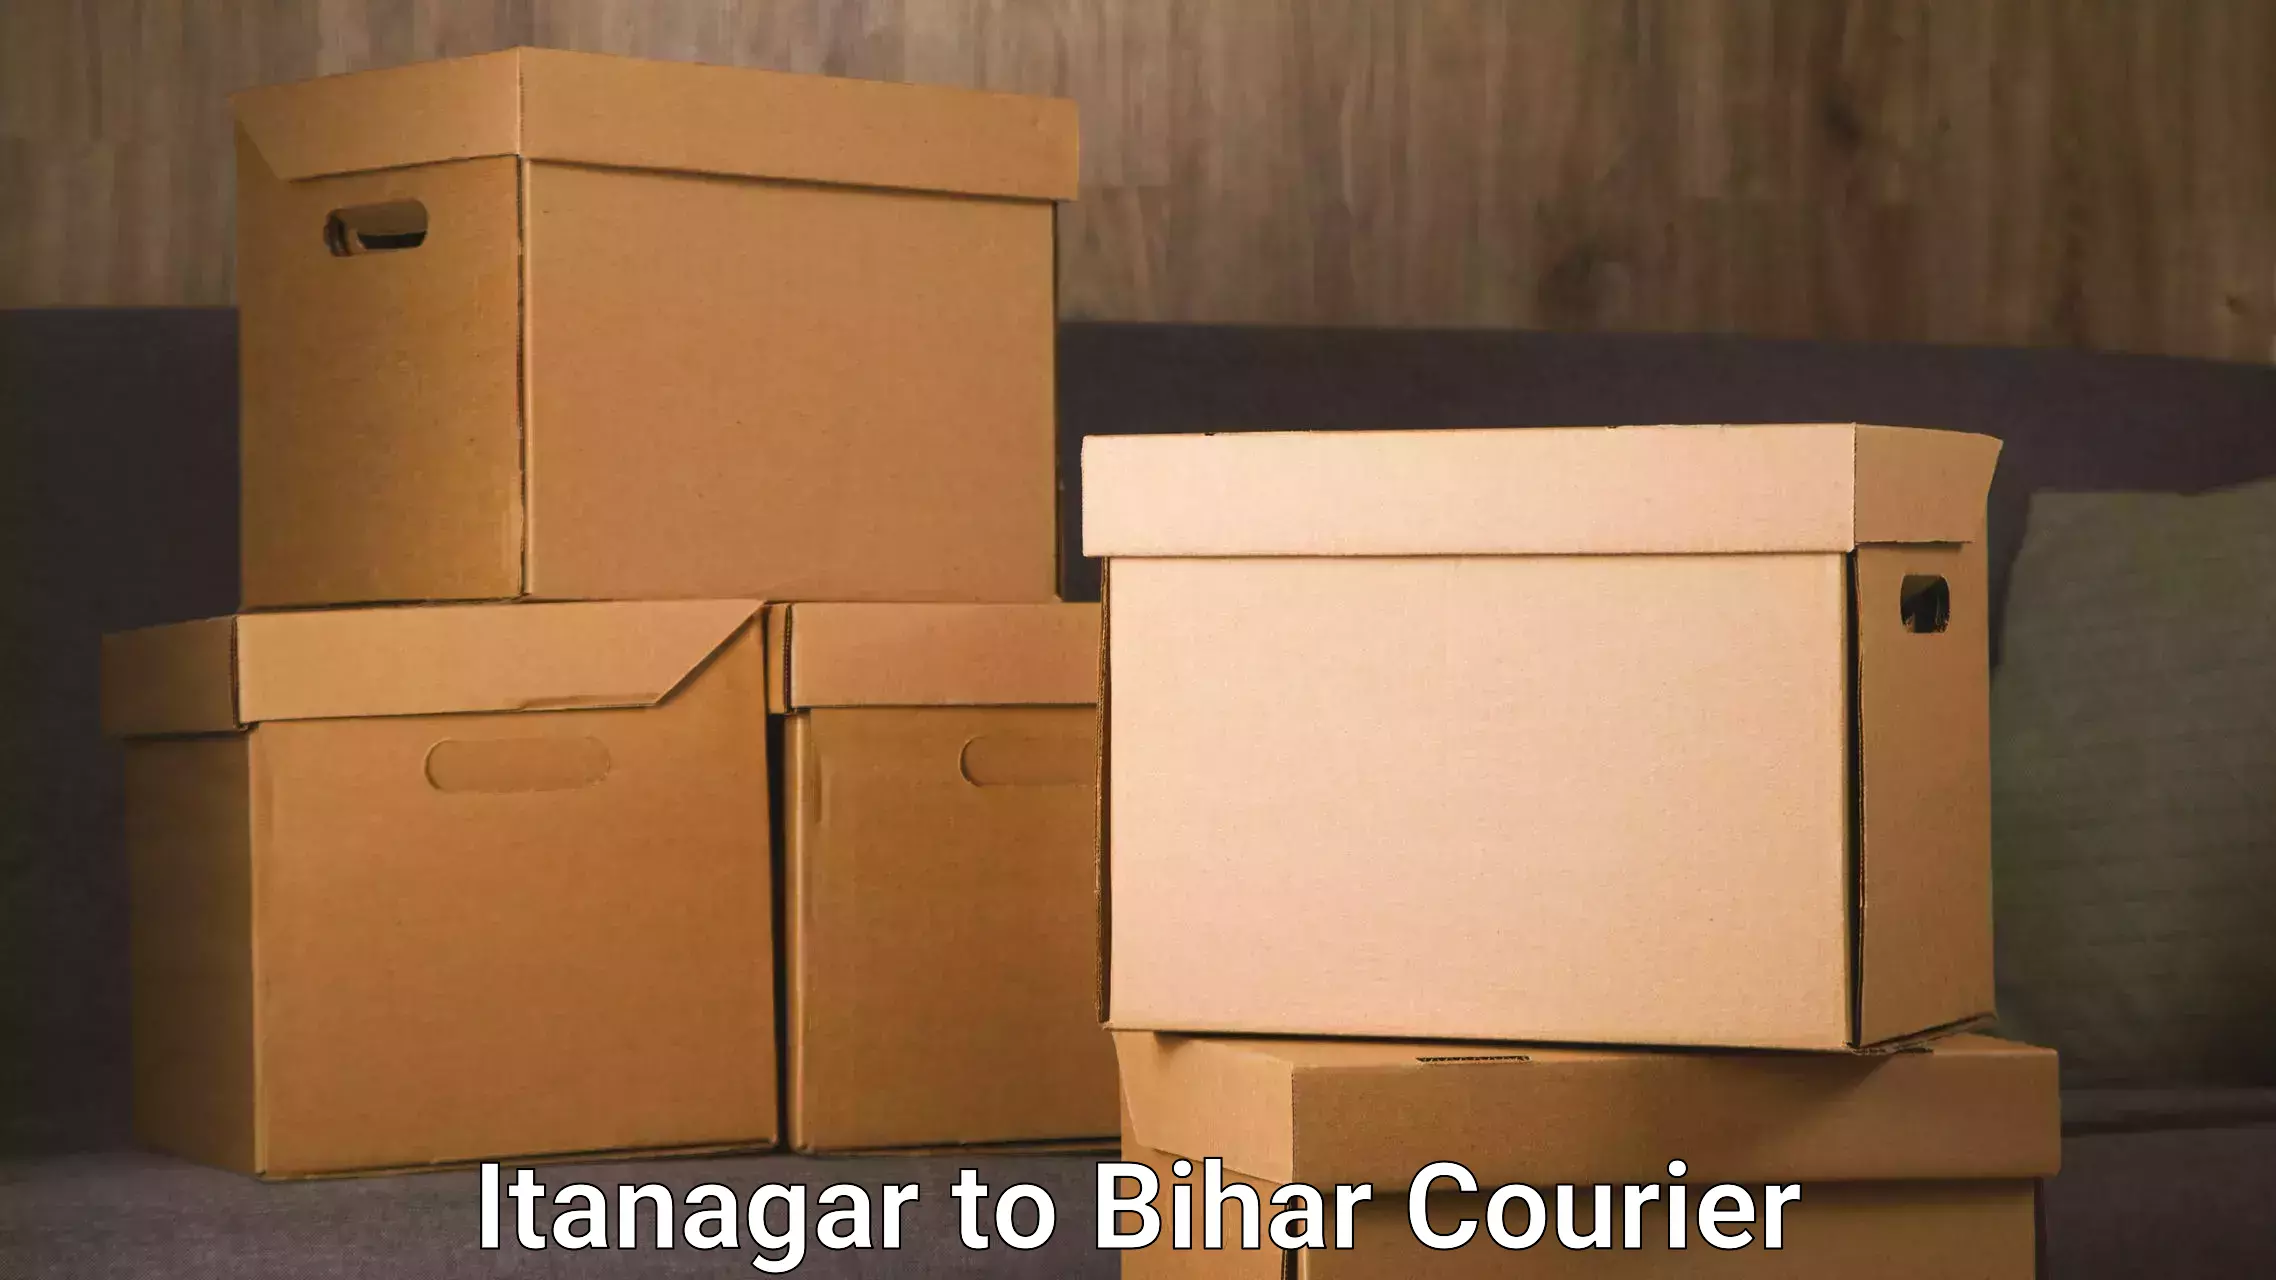 Global logistics network Itanagar to Kahalgaon